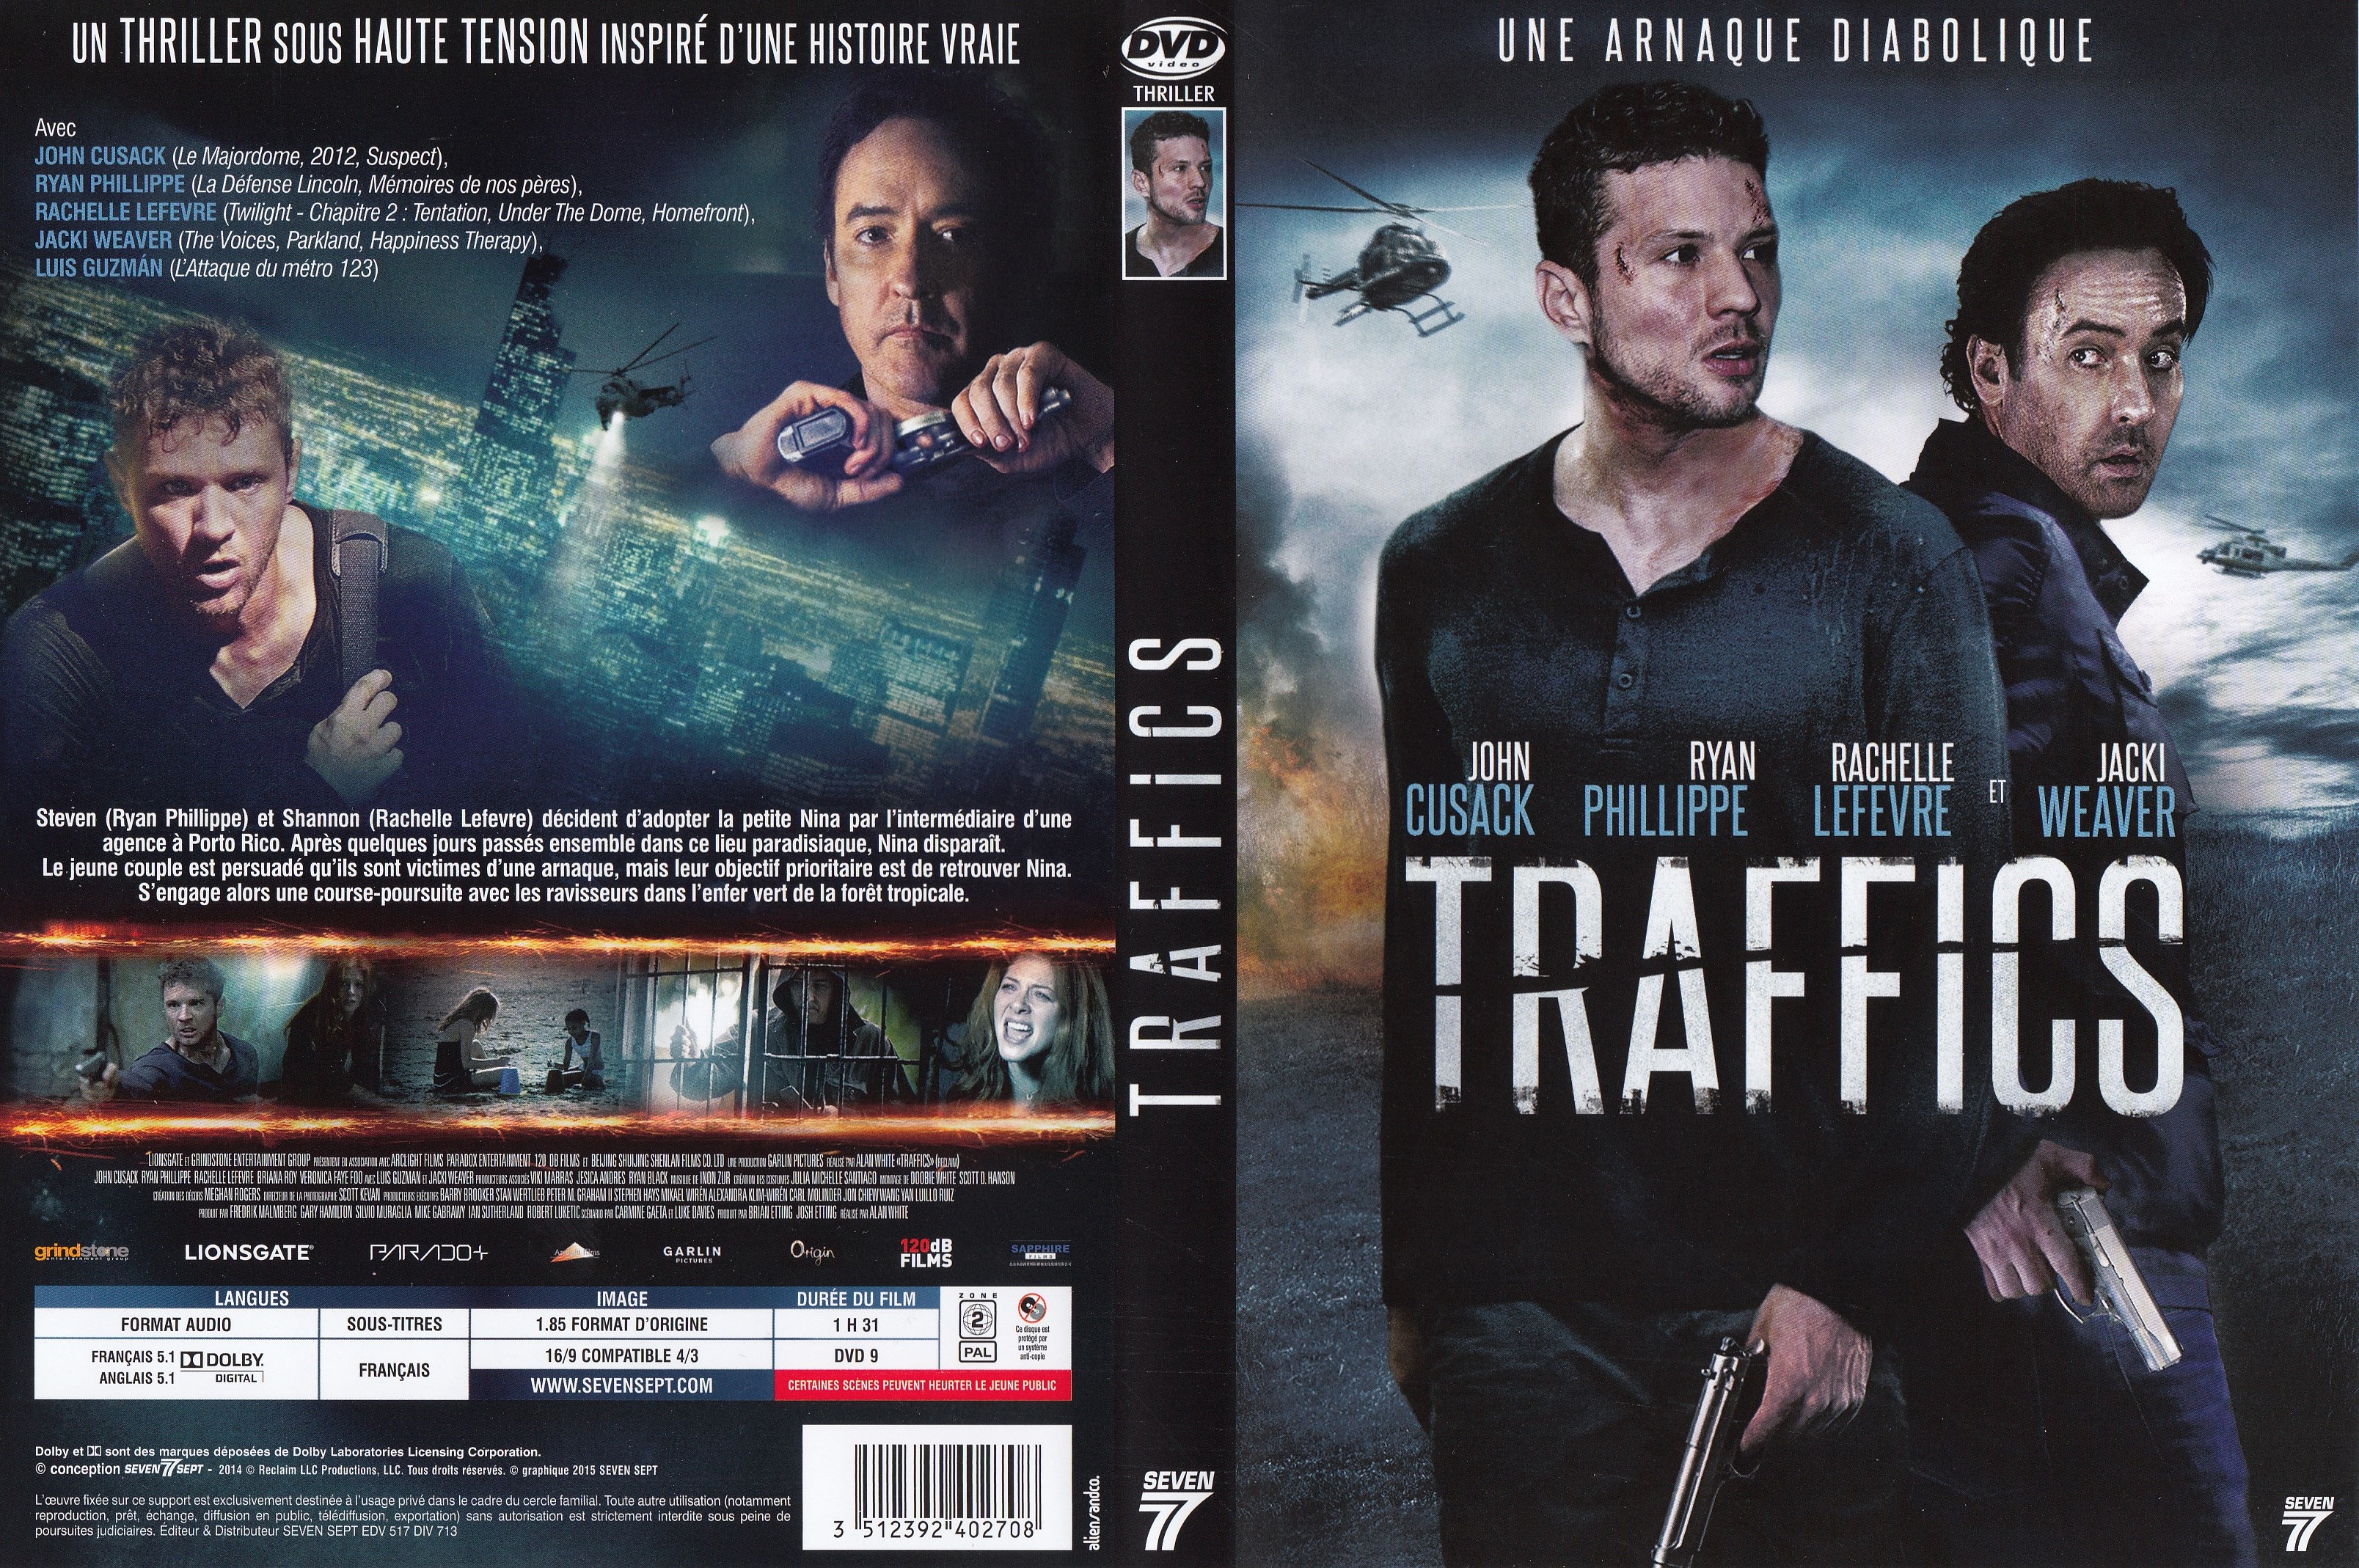 Jaquette DVD Traffics